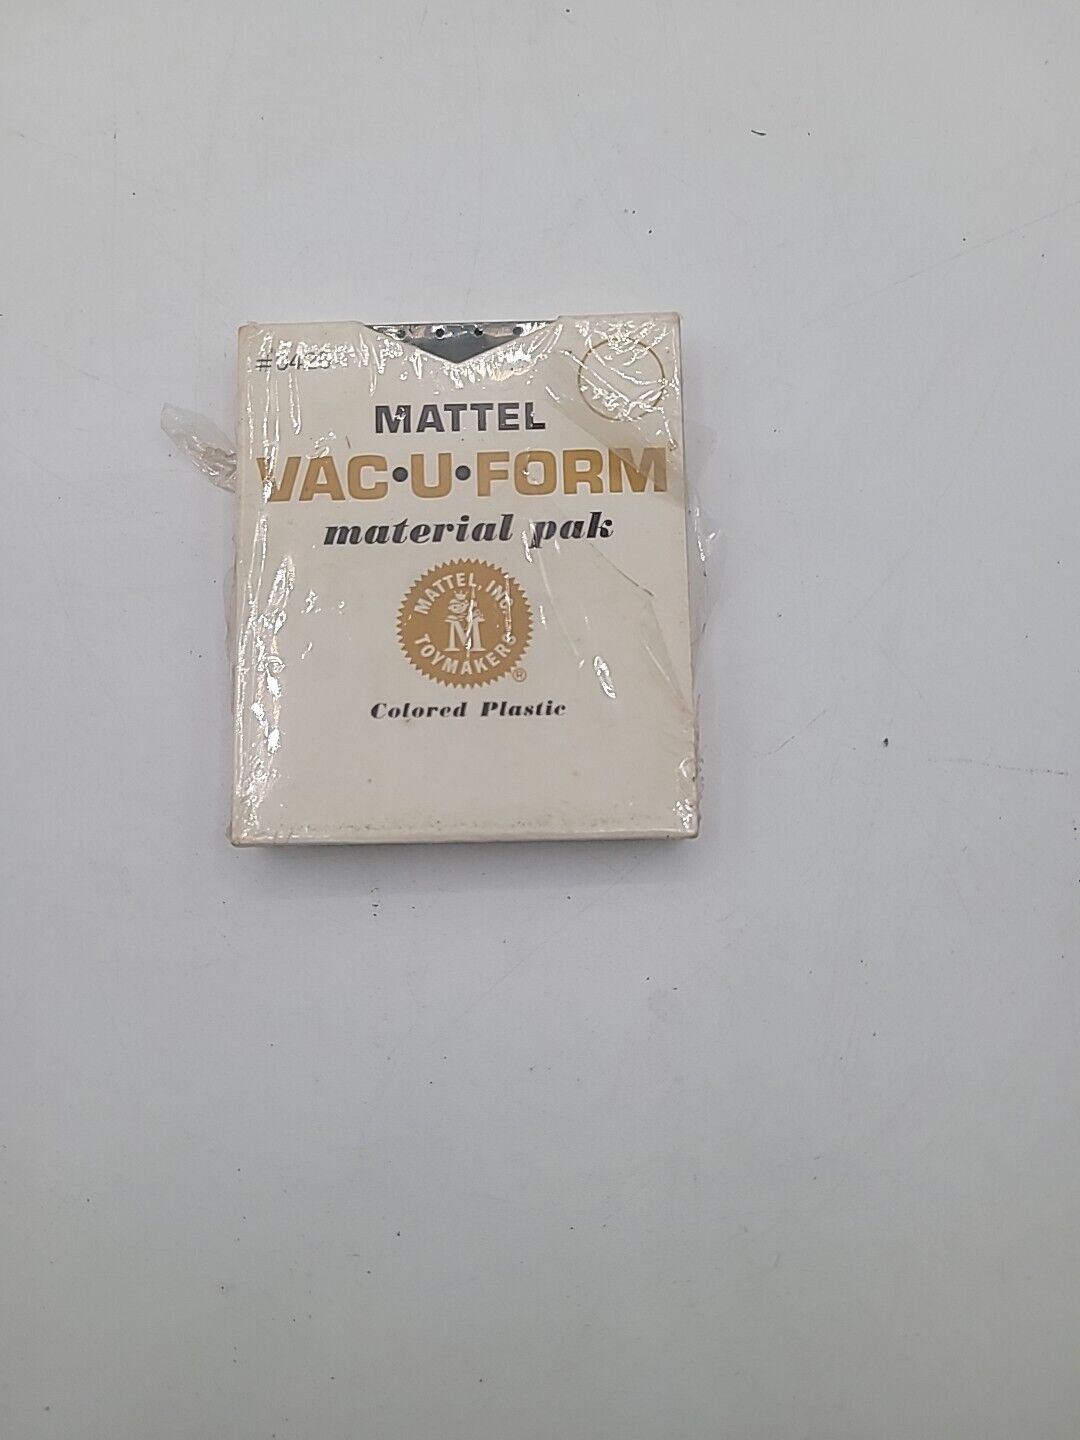 VINTAGE MATTEL VAC-U-FORM MATERIAL PAK #0425 COLORED PLASTIC 25 SHEETS SEALED